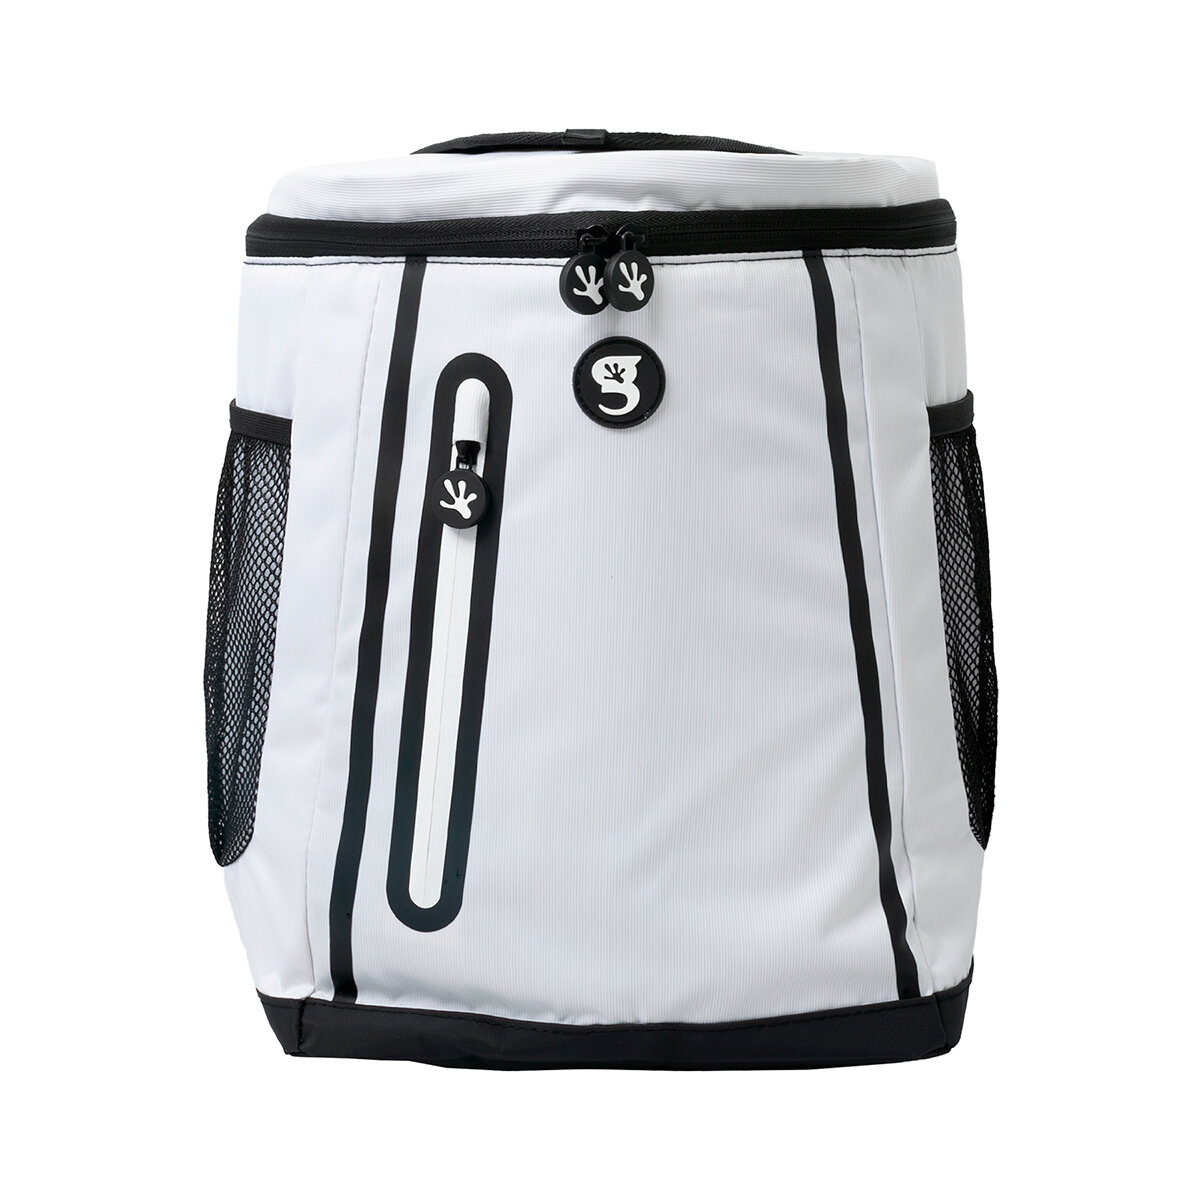 GeckoBrands, Hielera tipo Backpack, Color Blanco